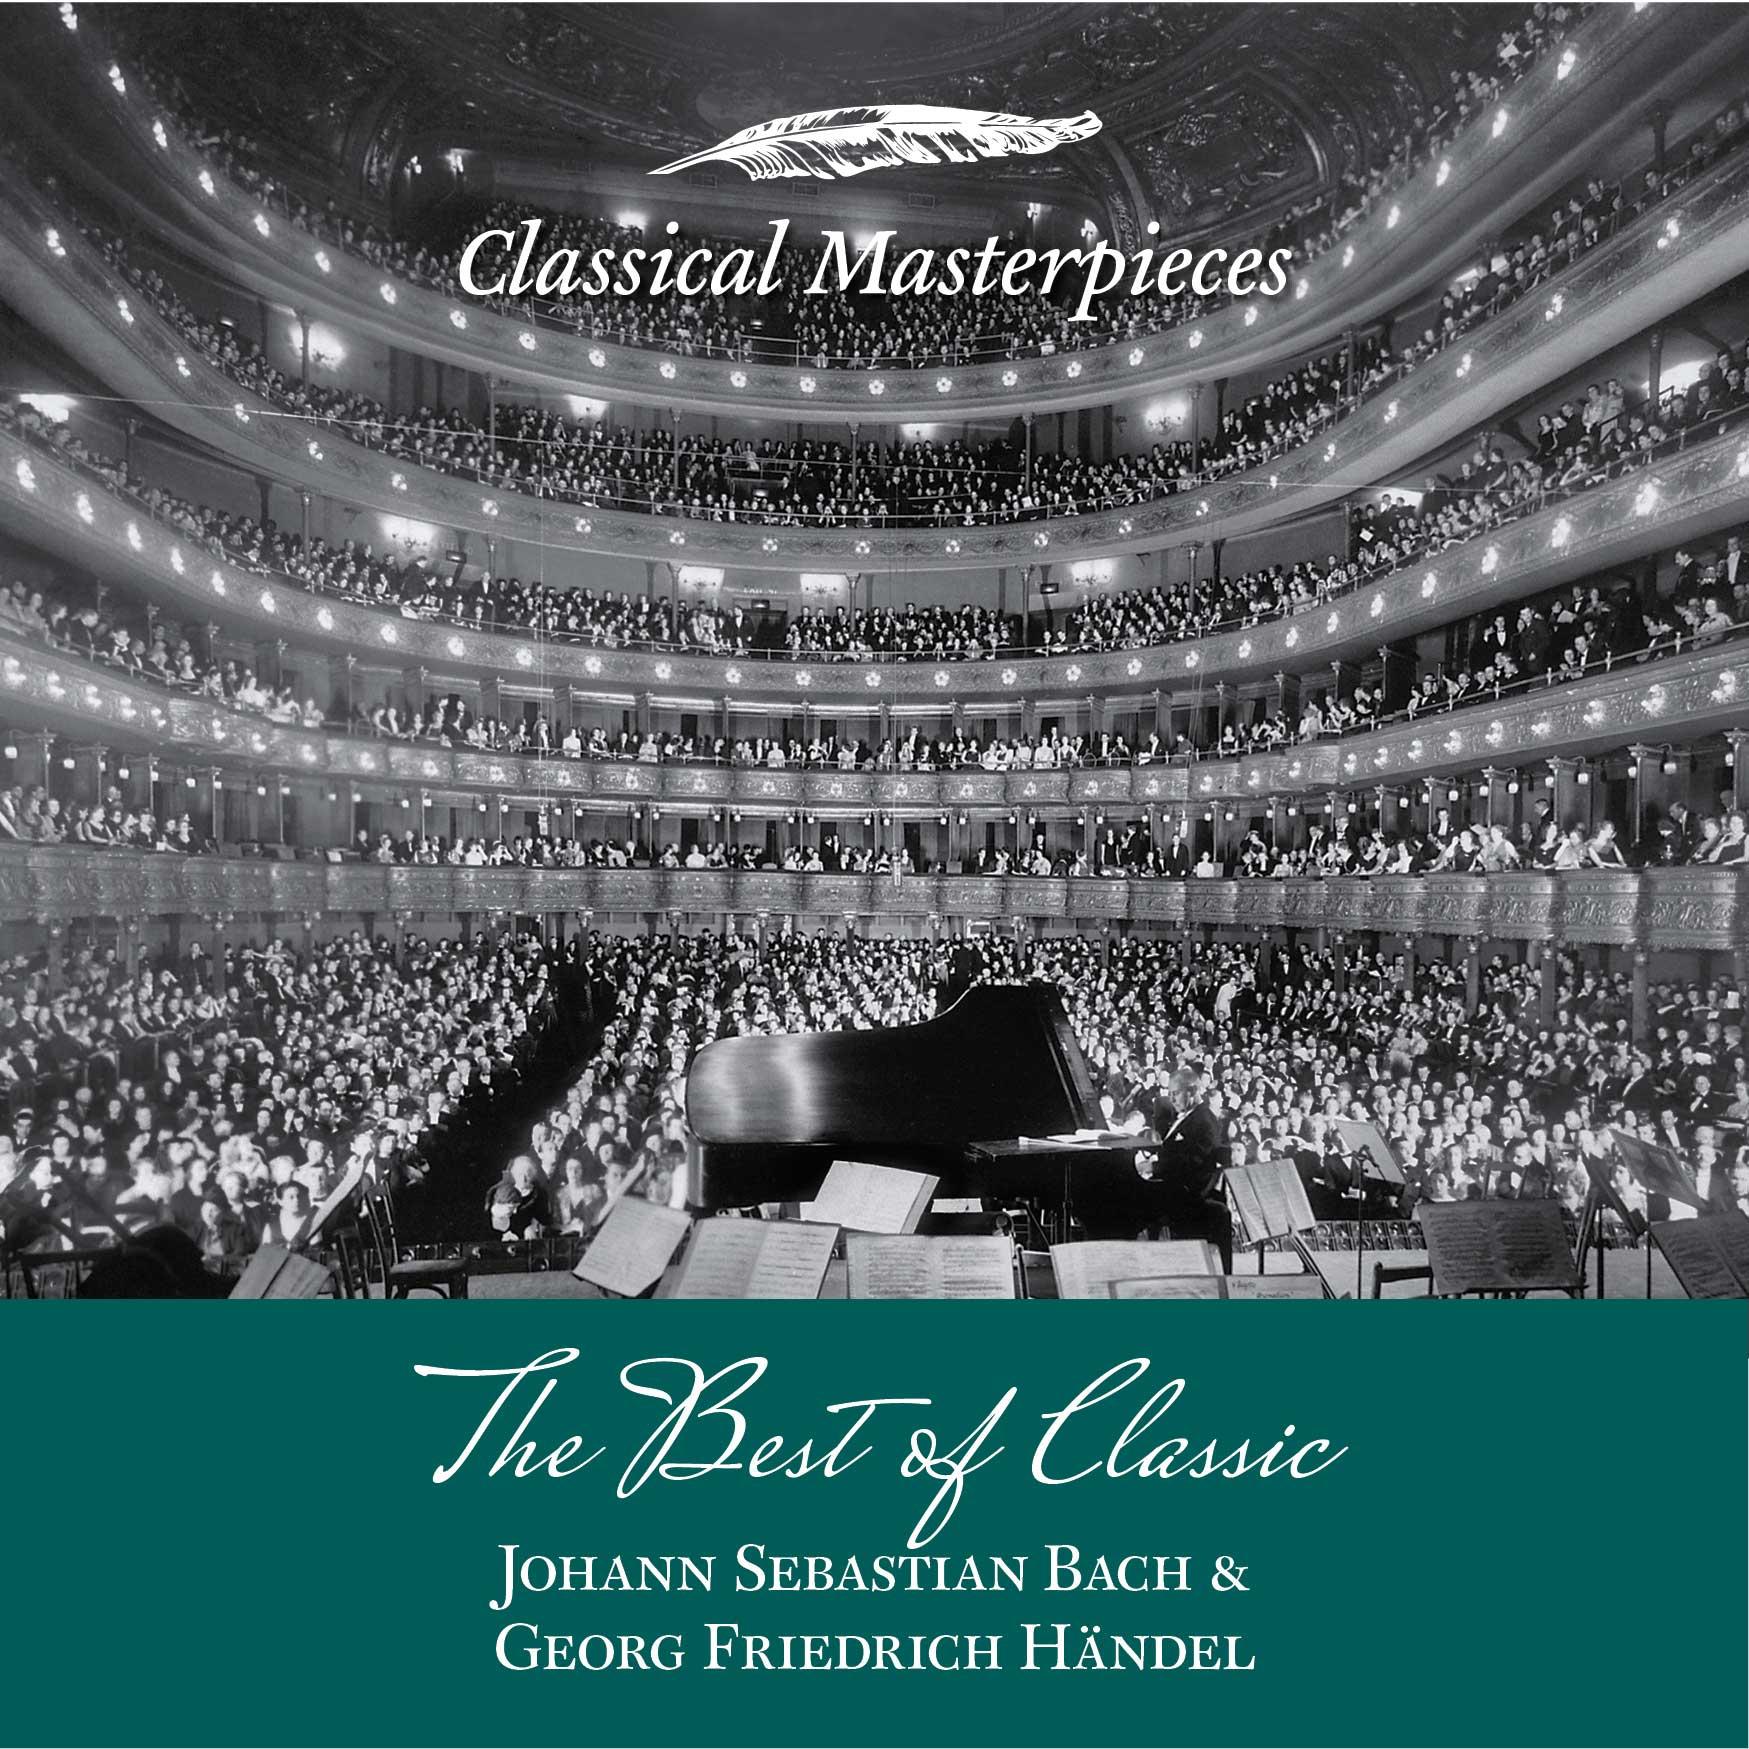 The Best of Classic  Johann Sebastian Bach  Georg Friedrich H ndel